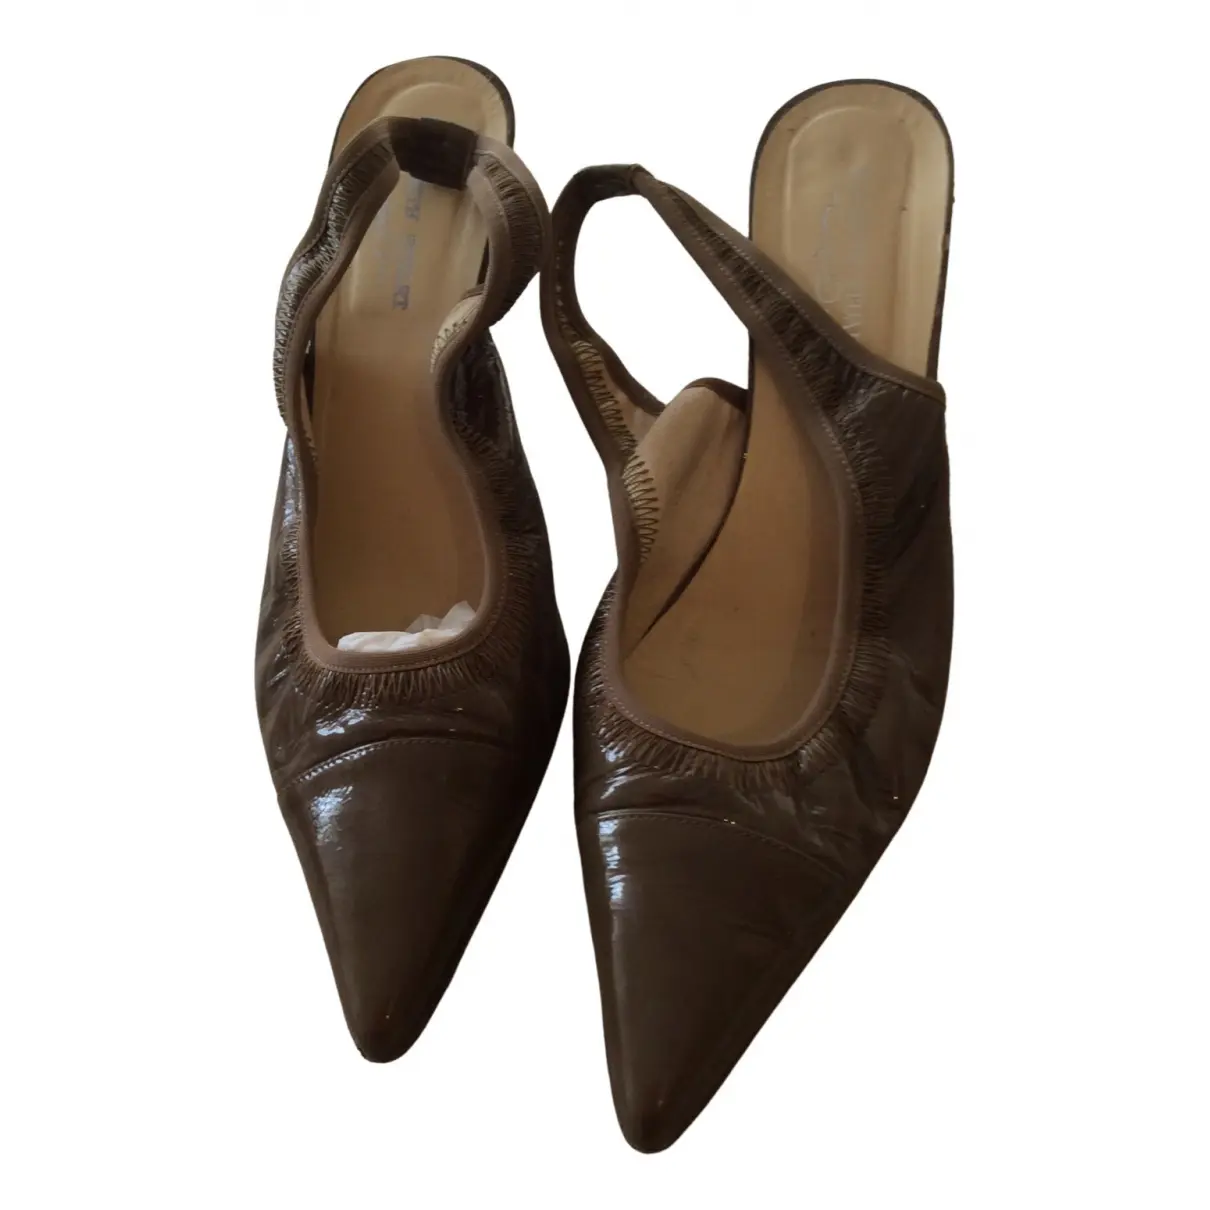 Leather sandals Elisabeth Stuart